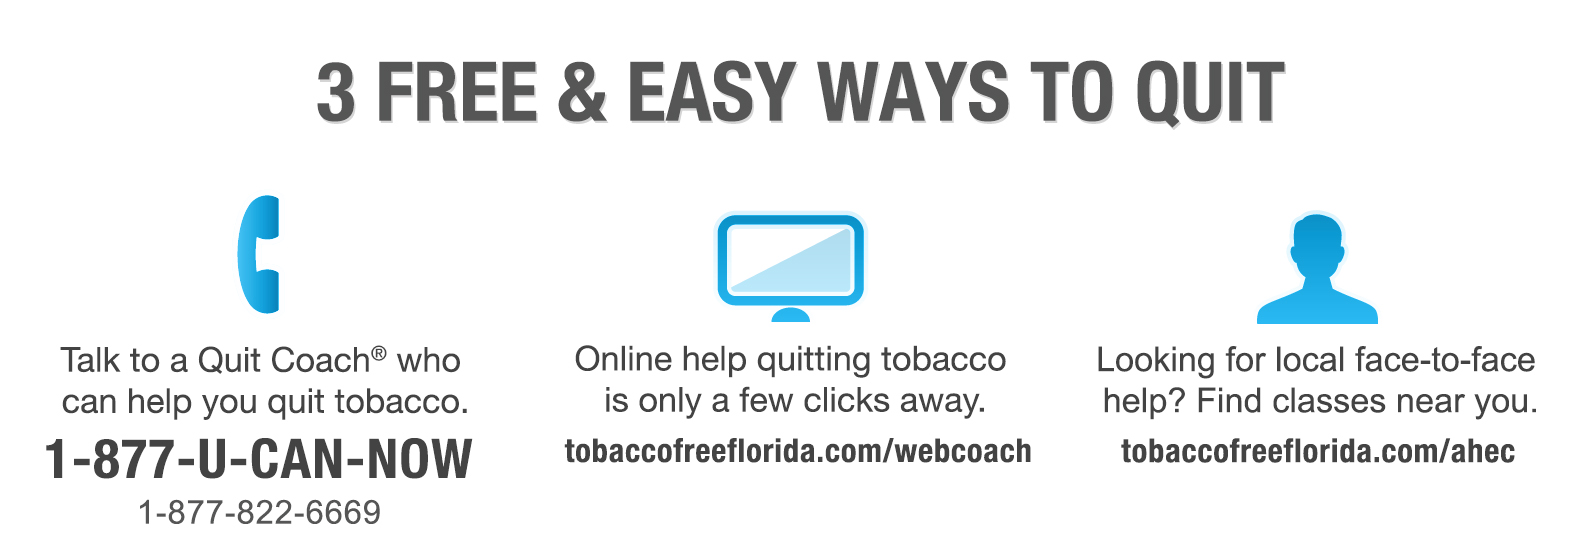 3 ways to quit tobacco